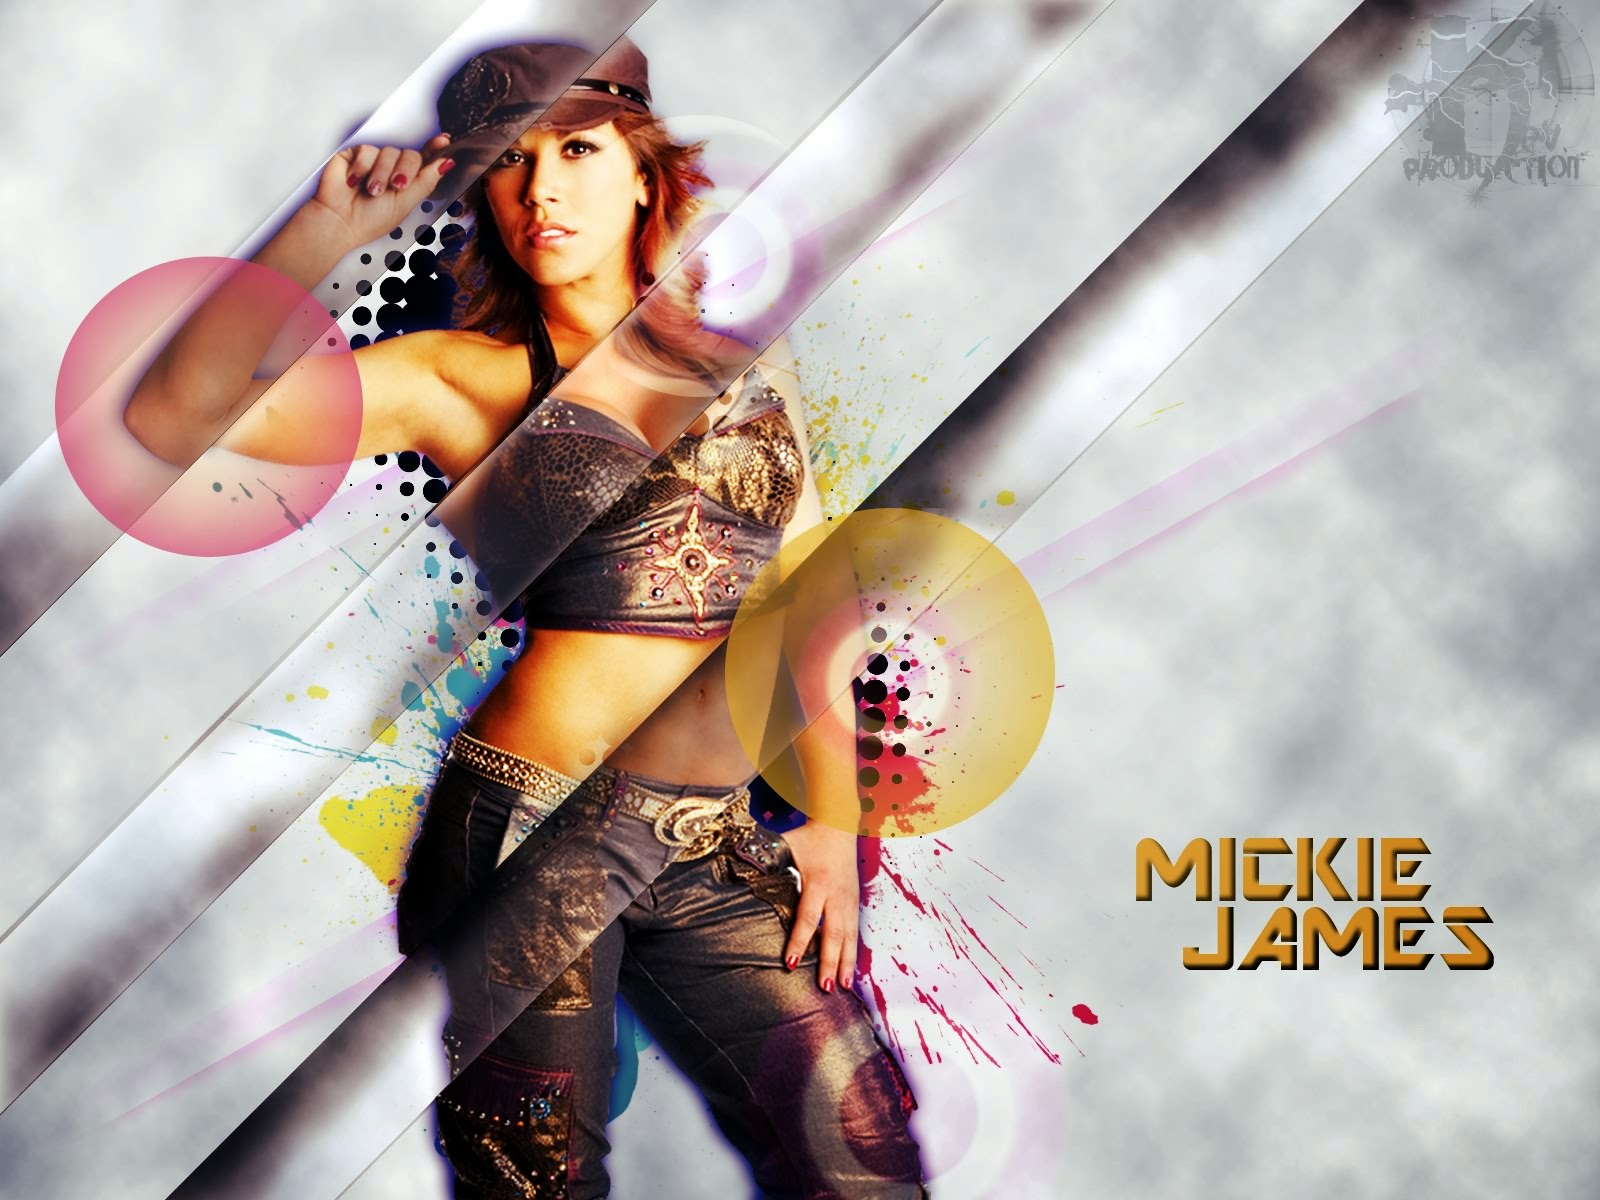 Mickie James HD Wallpapers   WWE Wrestler Download Free High